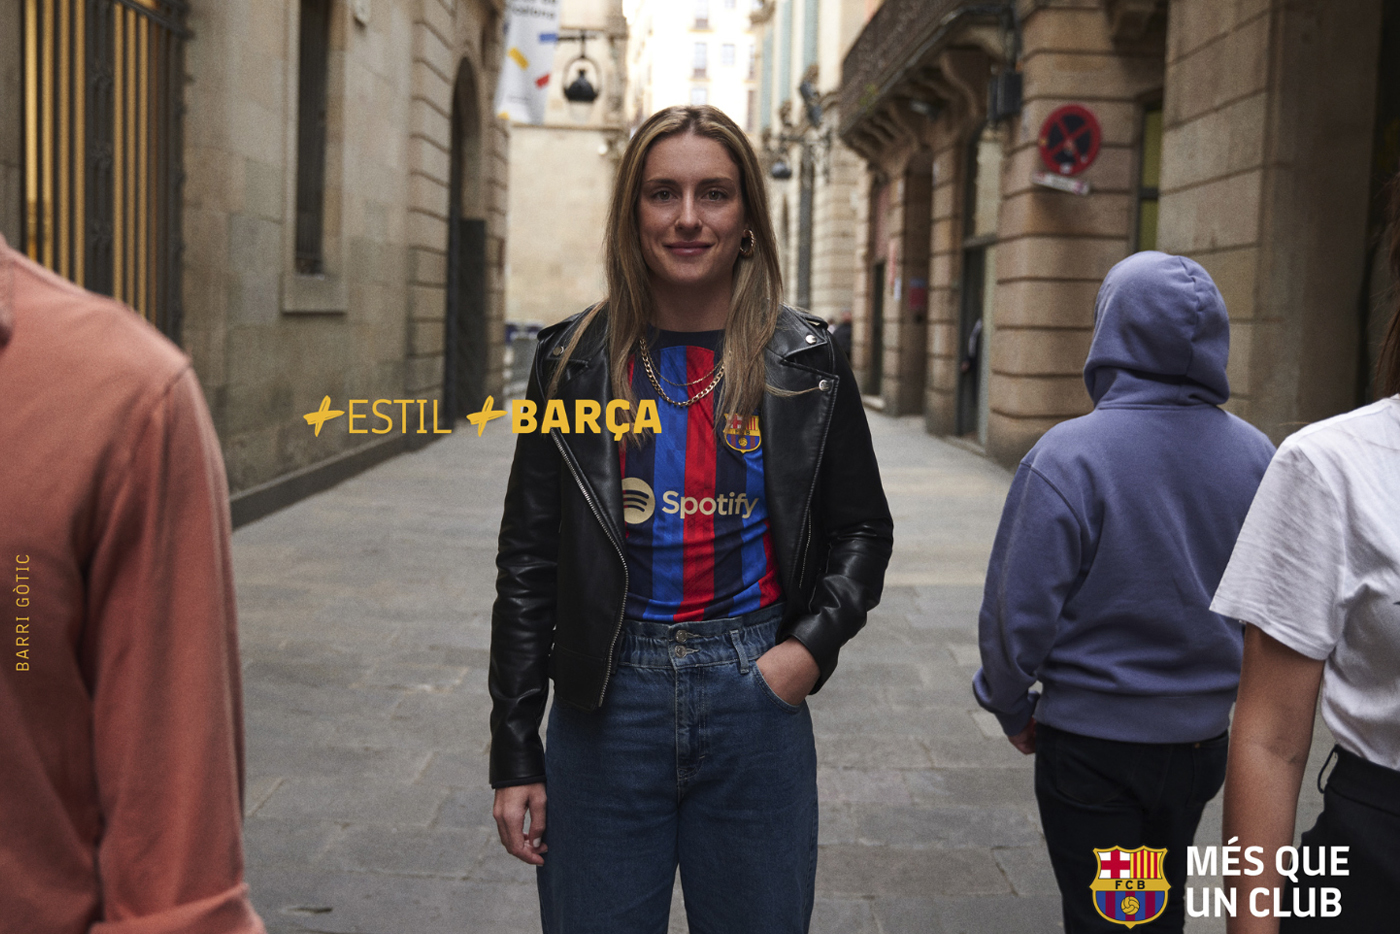 FC Barcelona, Pedri. Photo: Ale Burset. Postproduction: LongestLine.